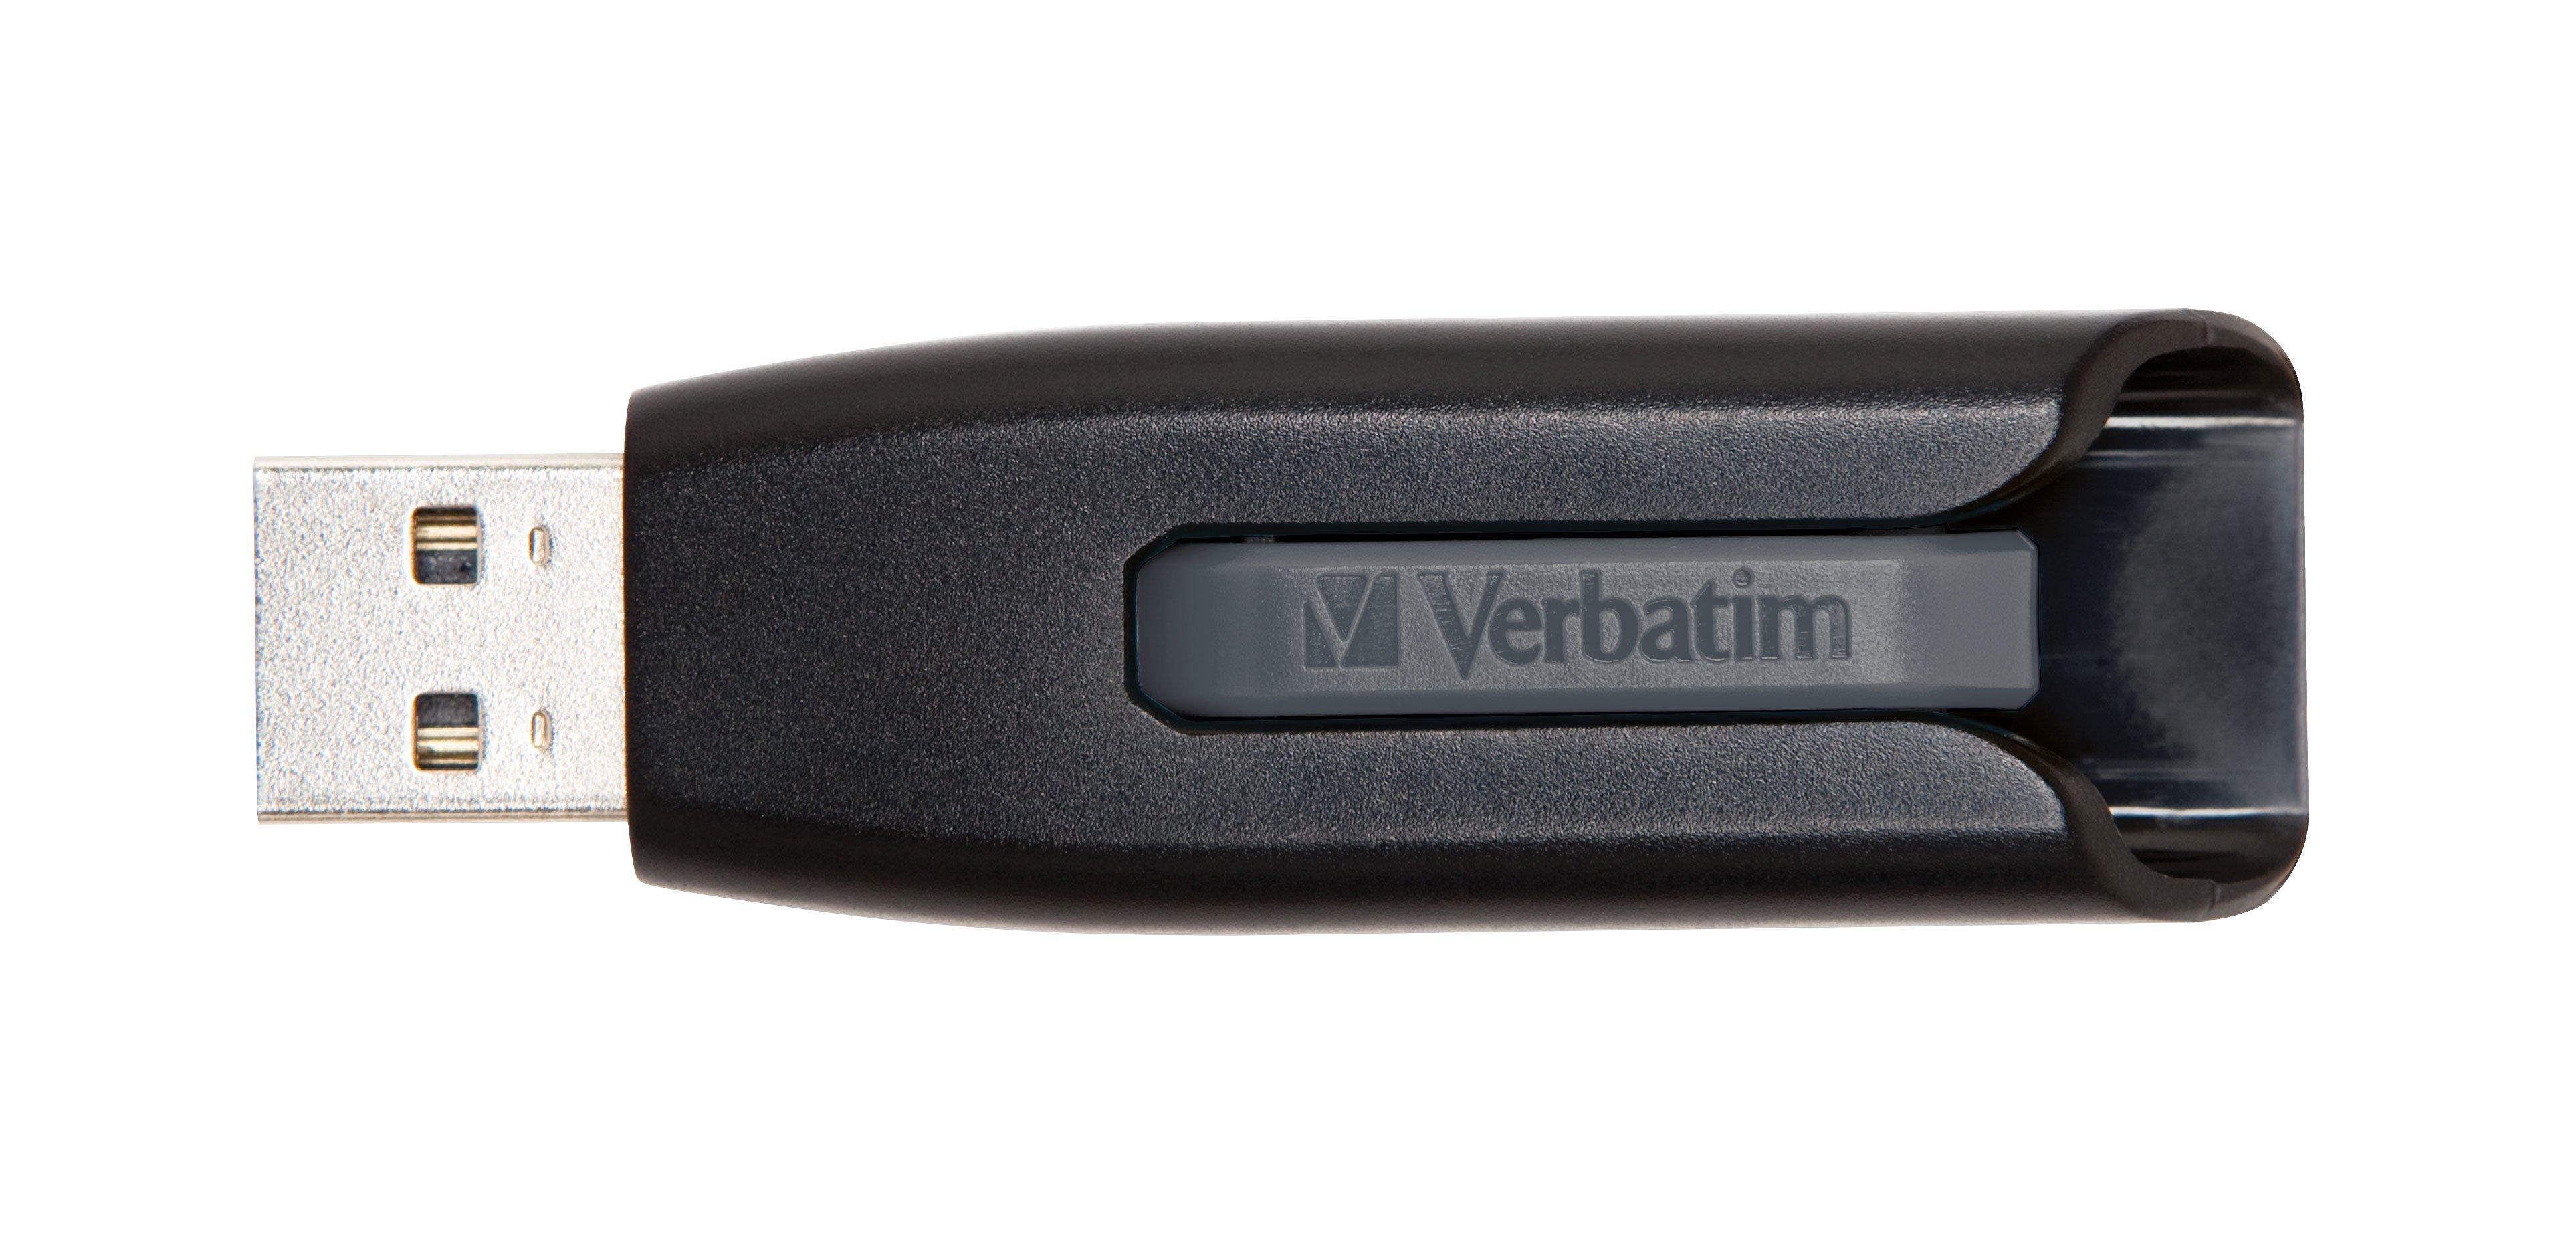 Verbatim  Verbatim V3 - USB 3.0-Stick 16 GB - Schwarz 